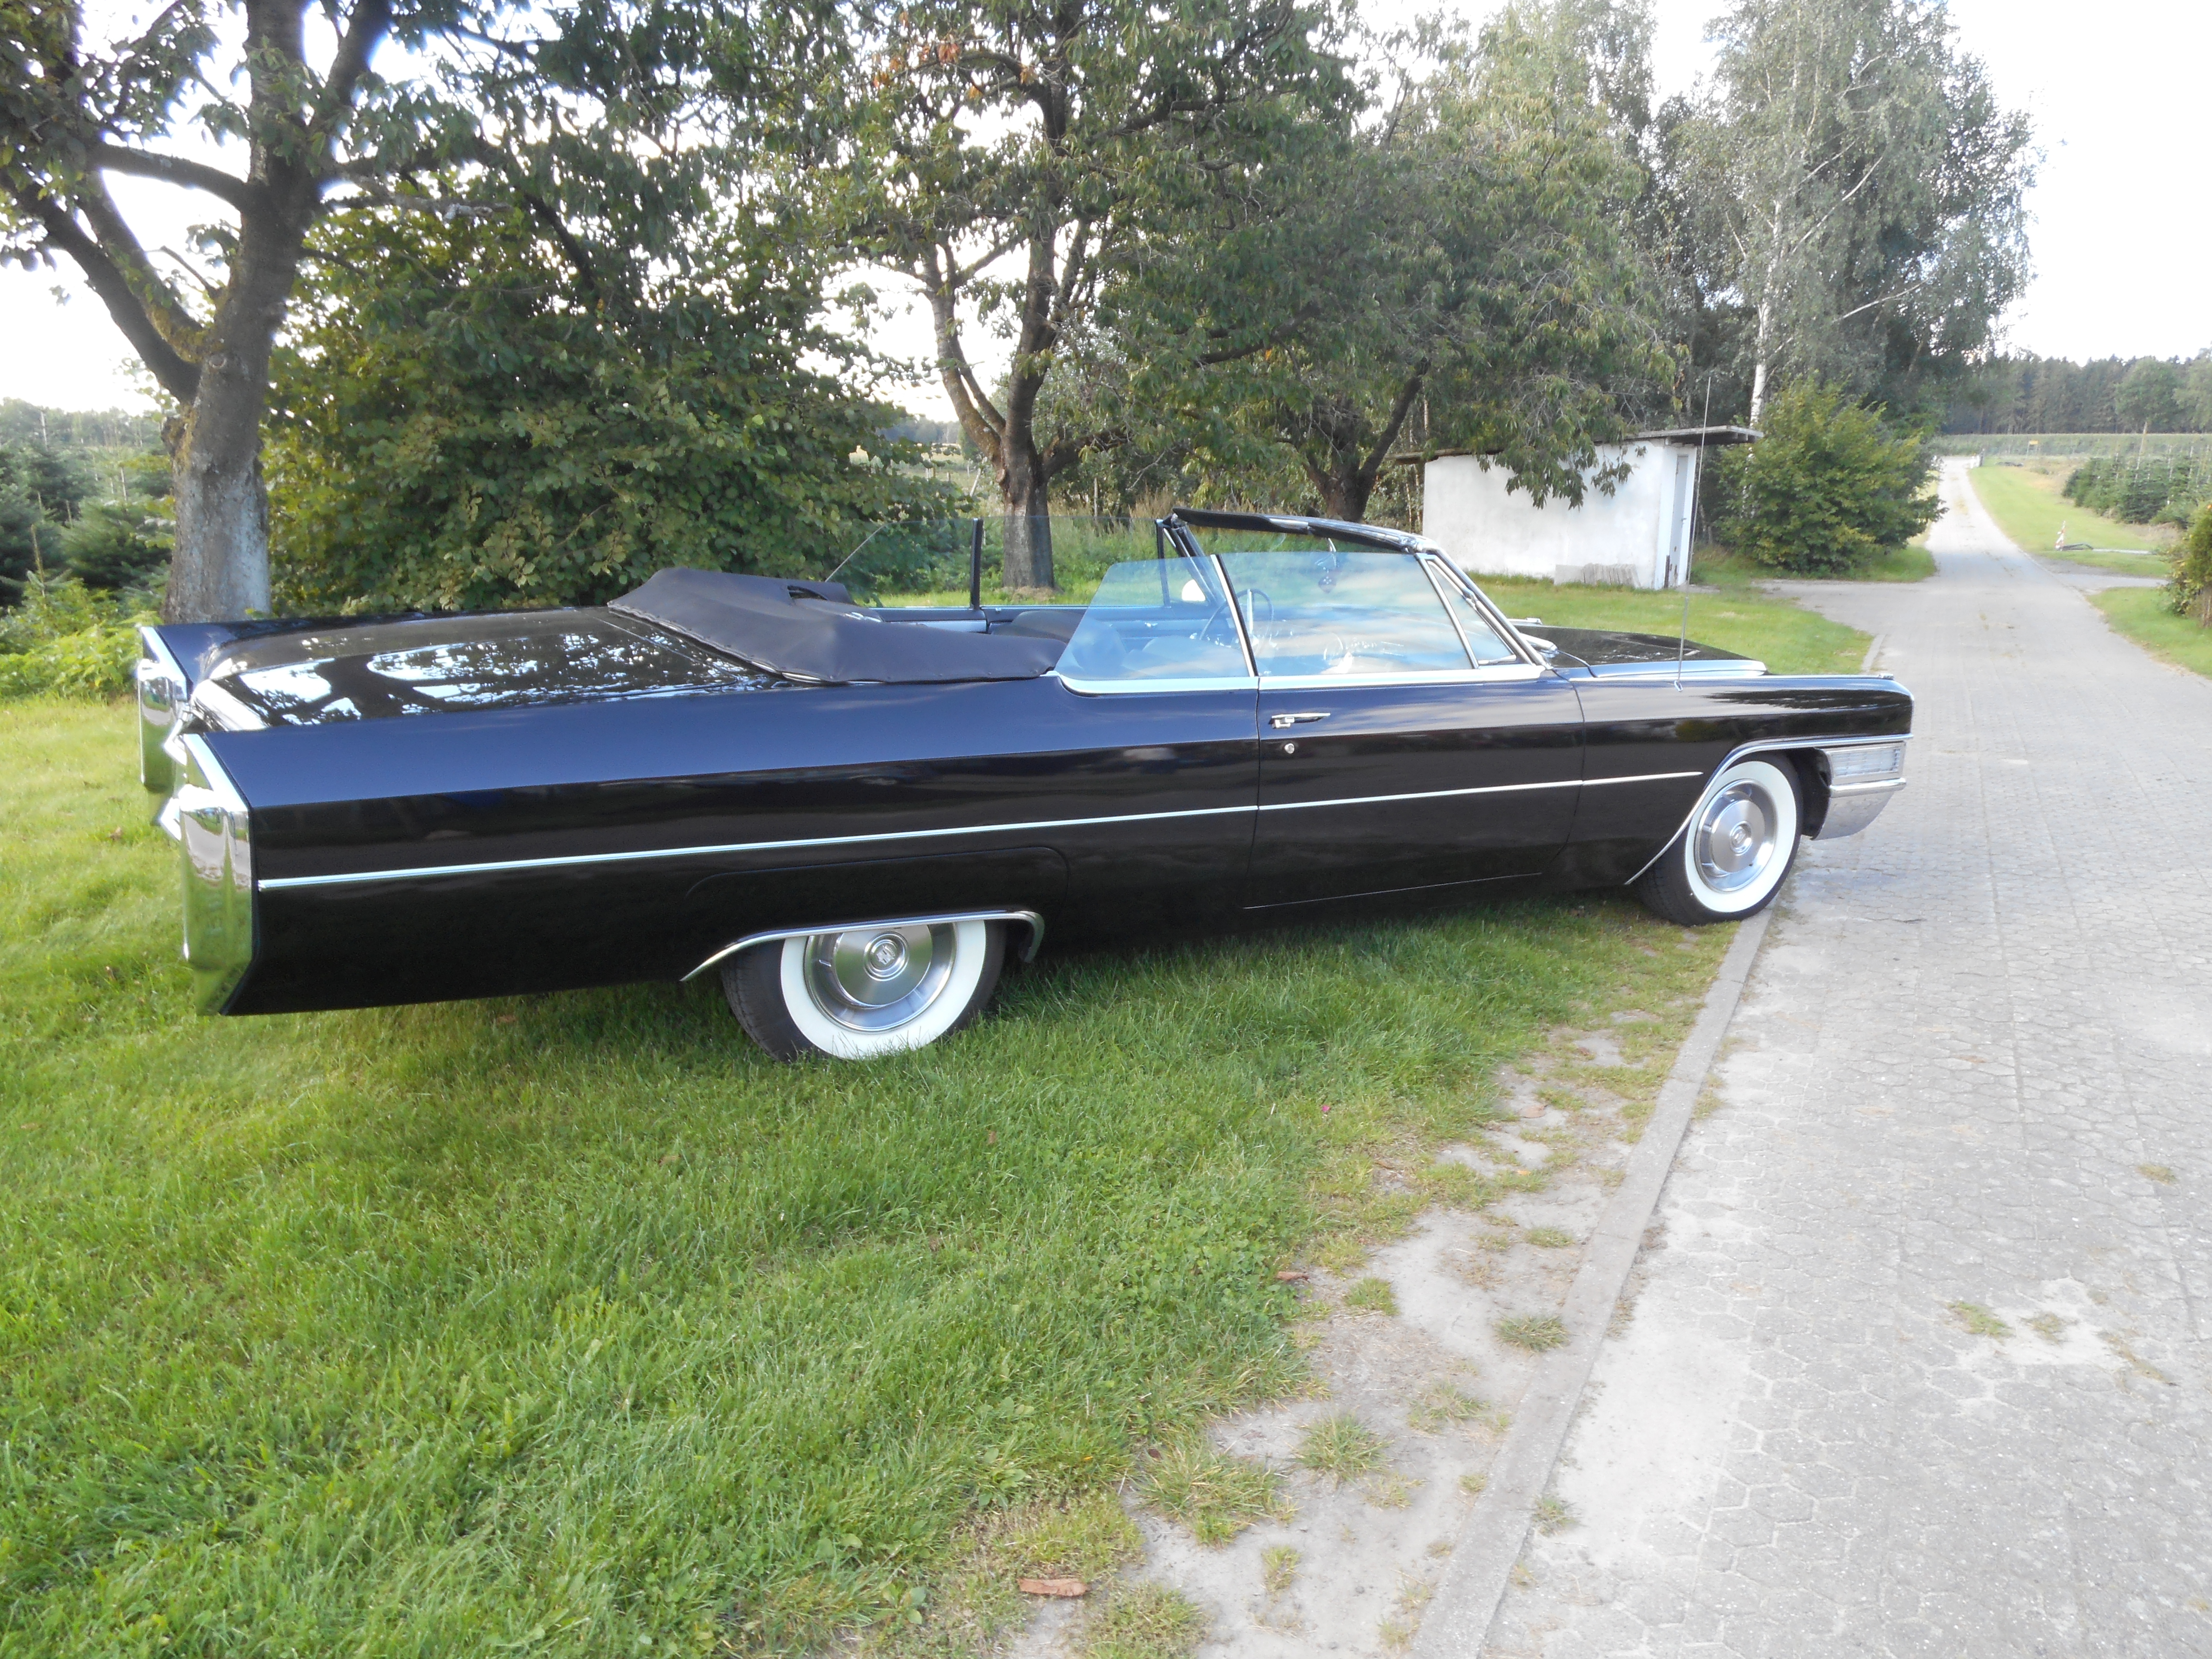 Cadillac Deville 1965